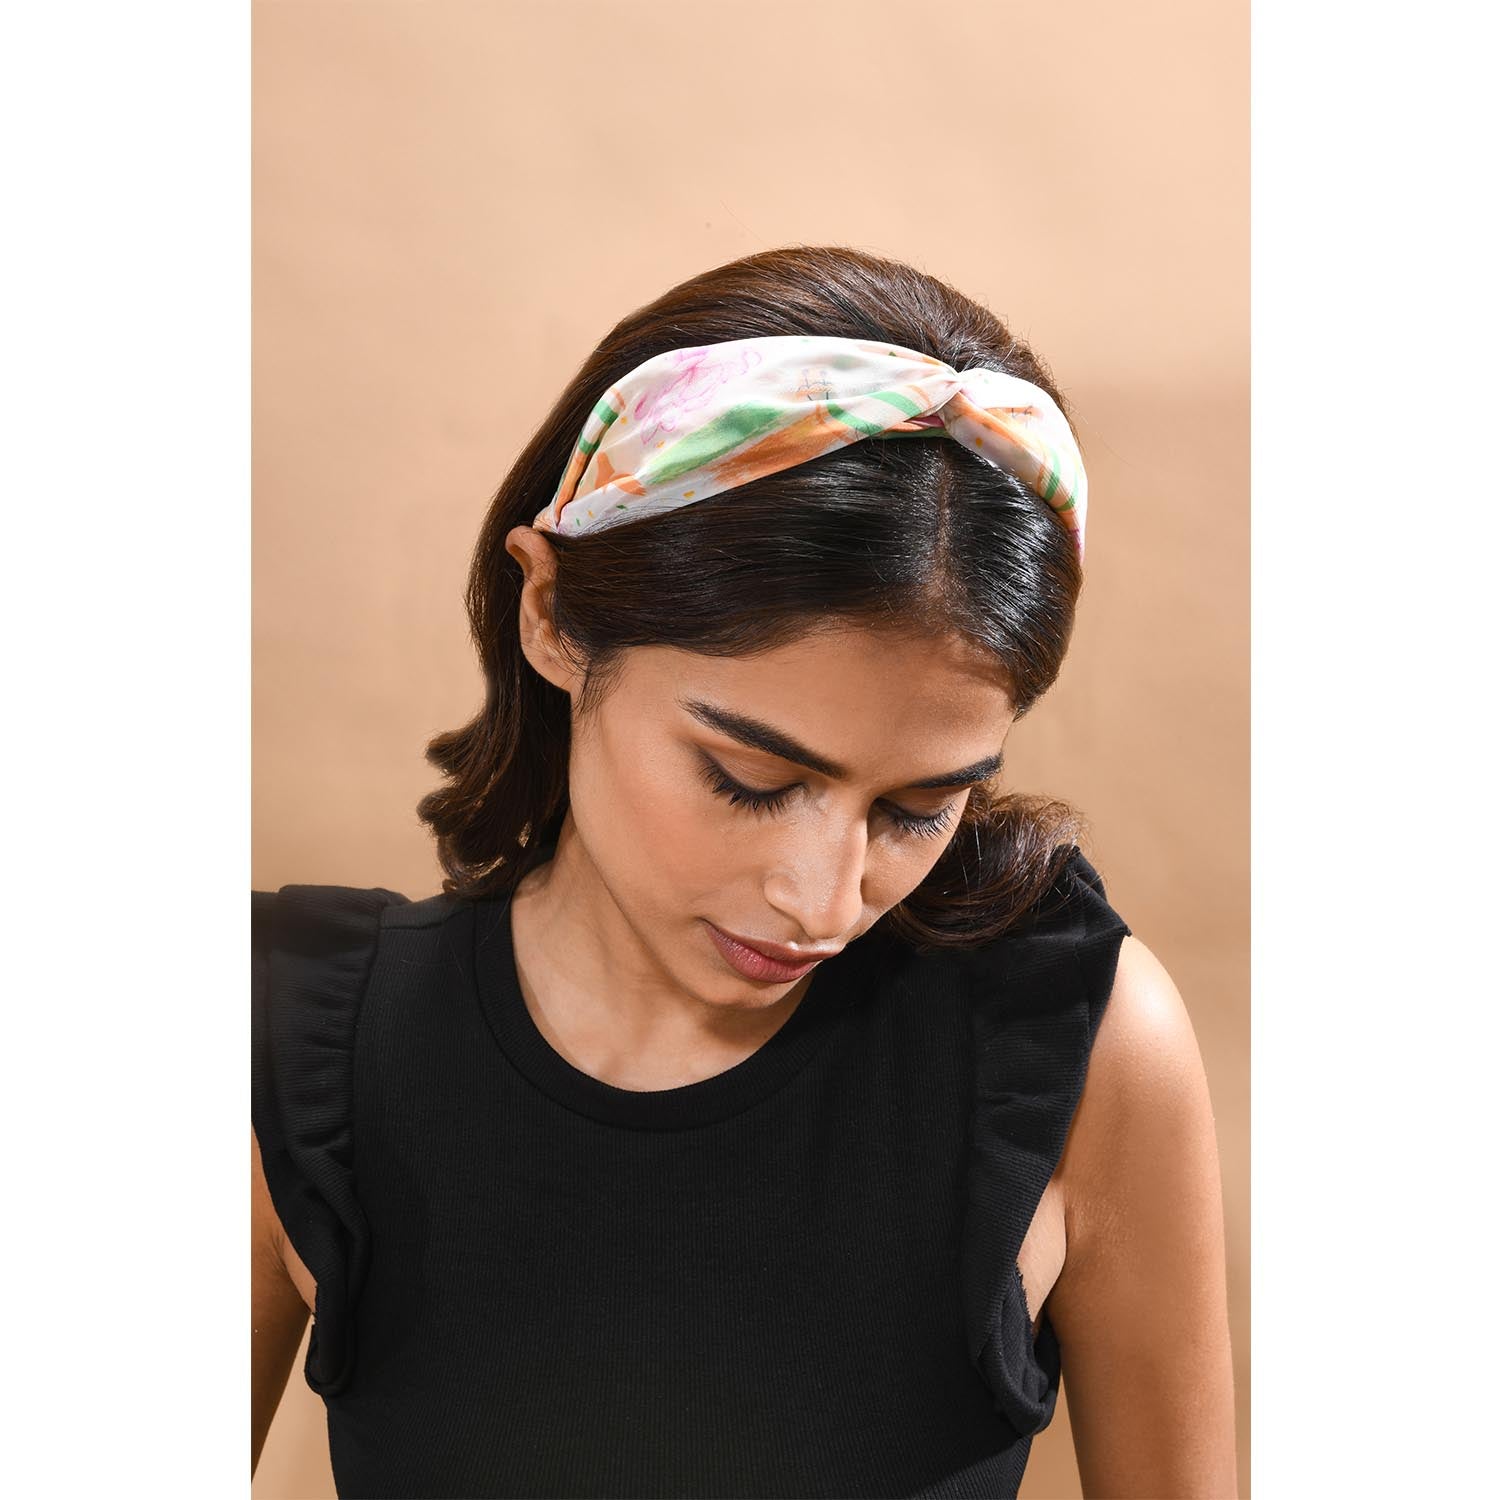 Veronica Headband in India Inspired Print